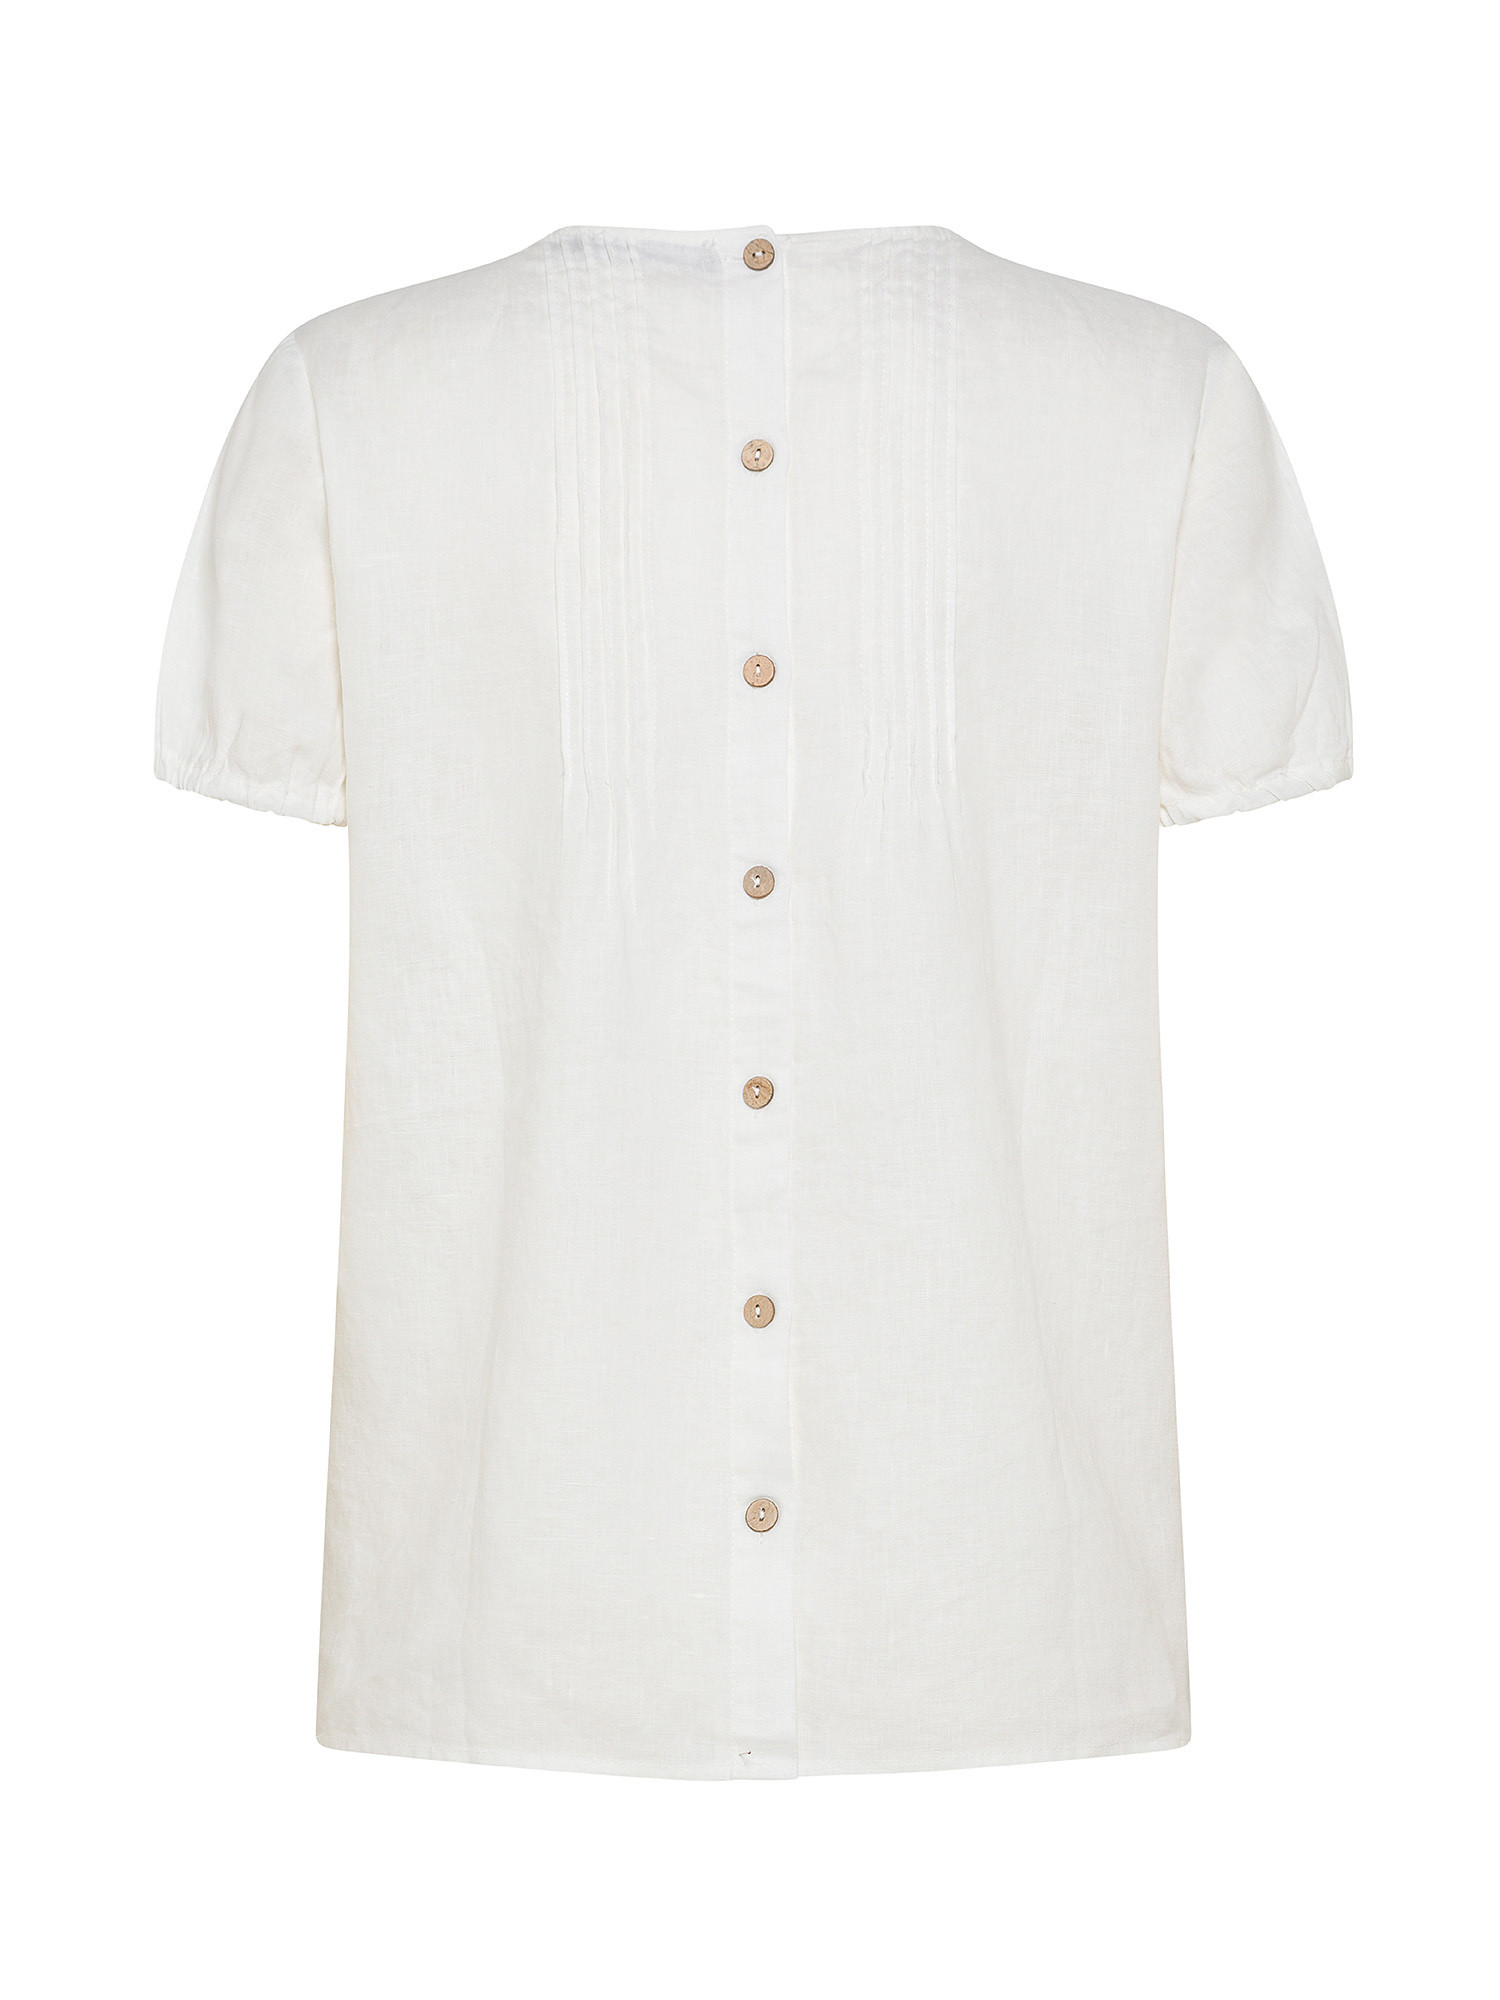 Koan - Linen blouse, White, large image number 1